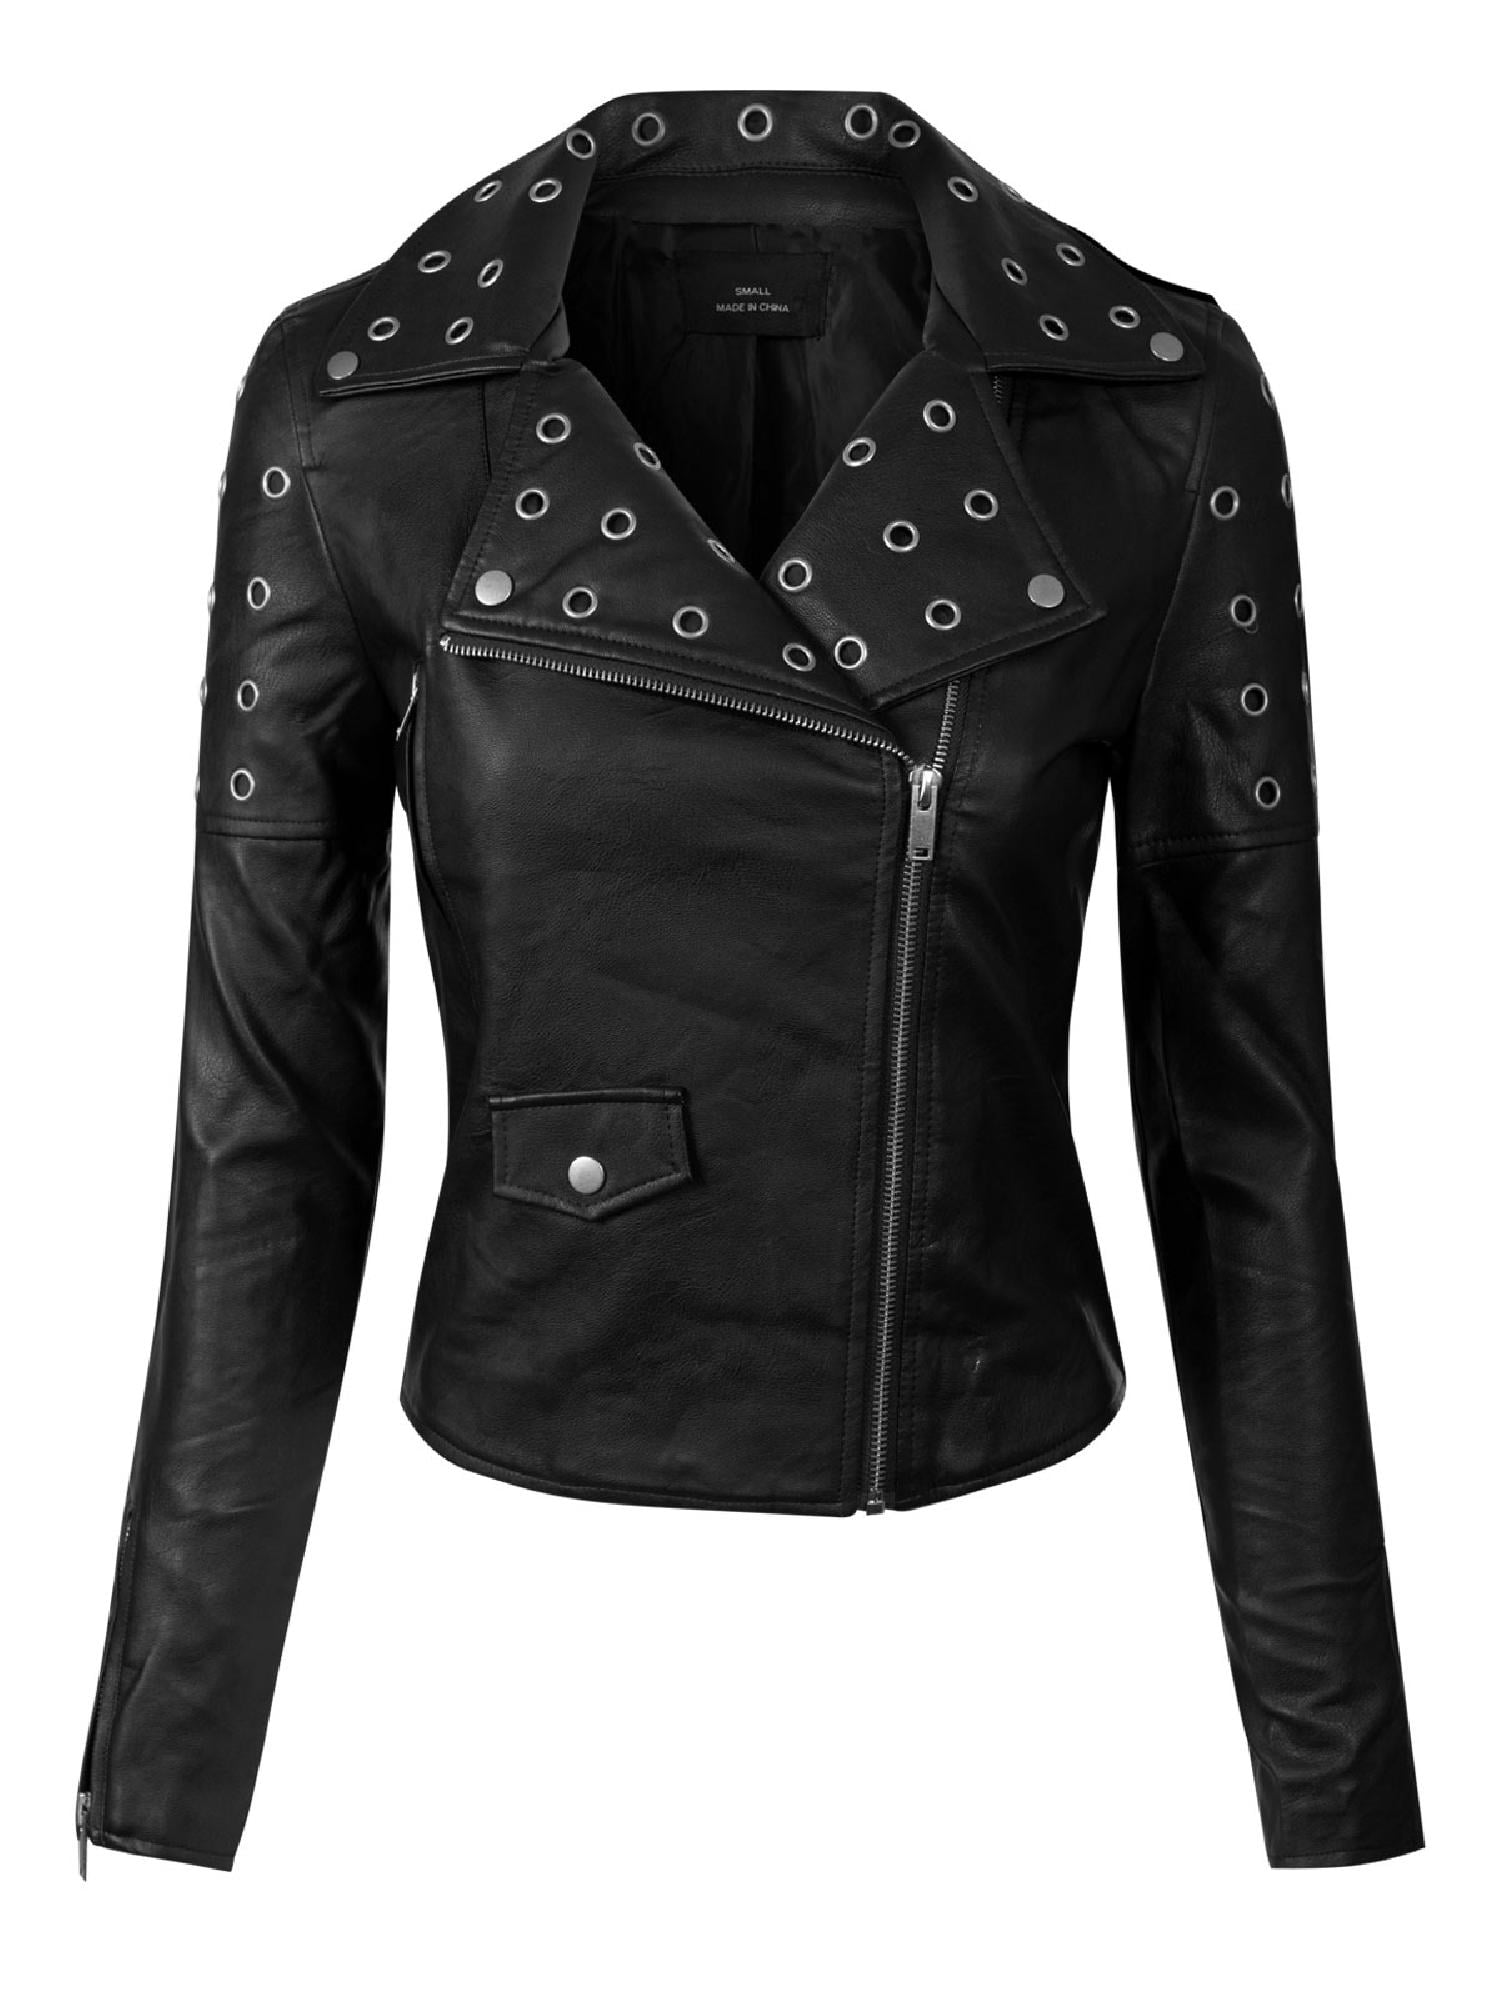 Made By Olivia Women S Long Sleeve Zipper Closure Moto Biker Faux Leather Jacket